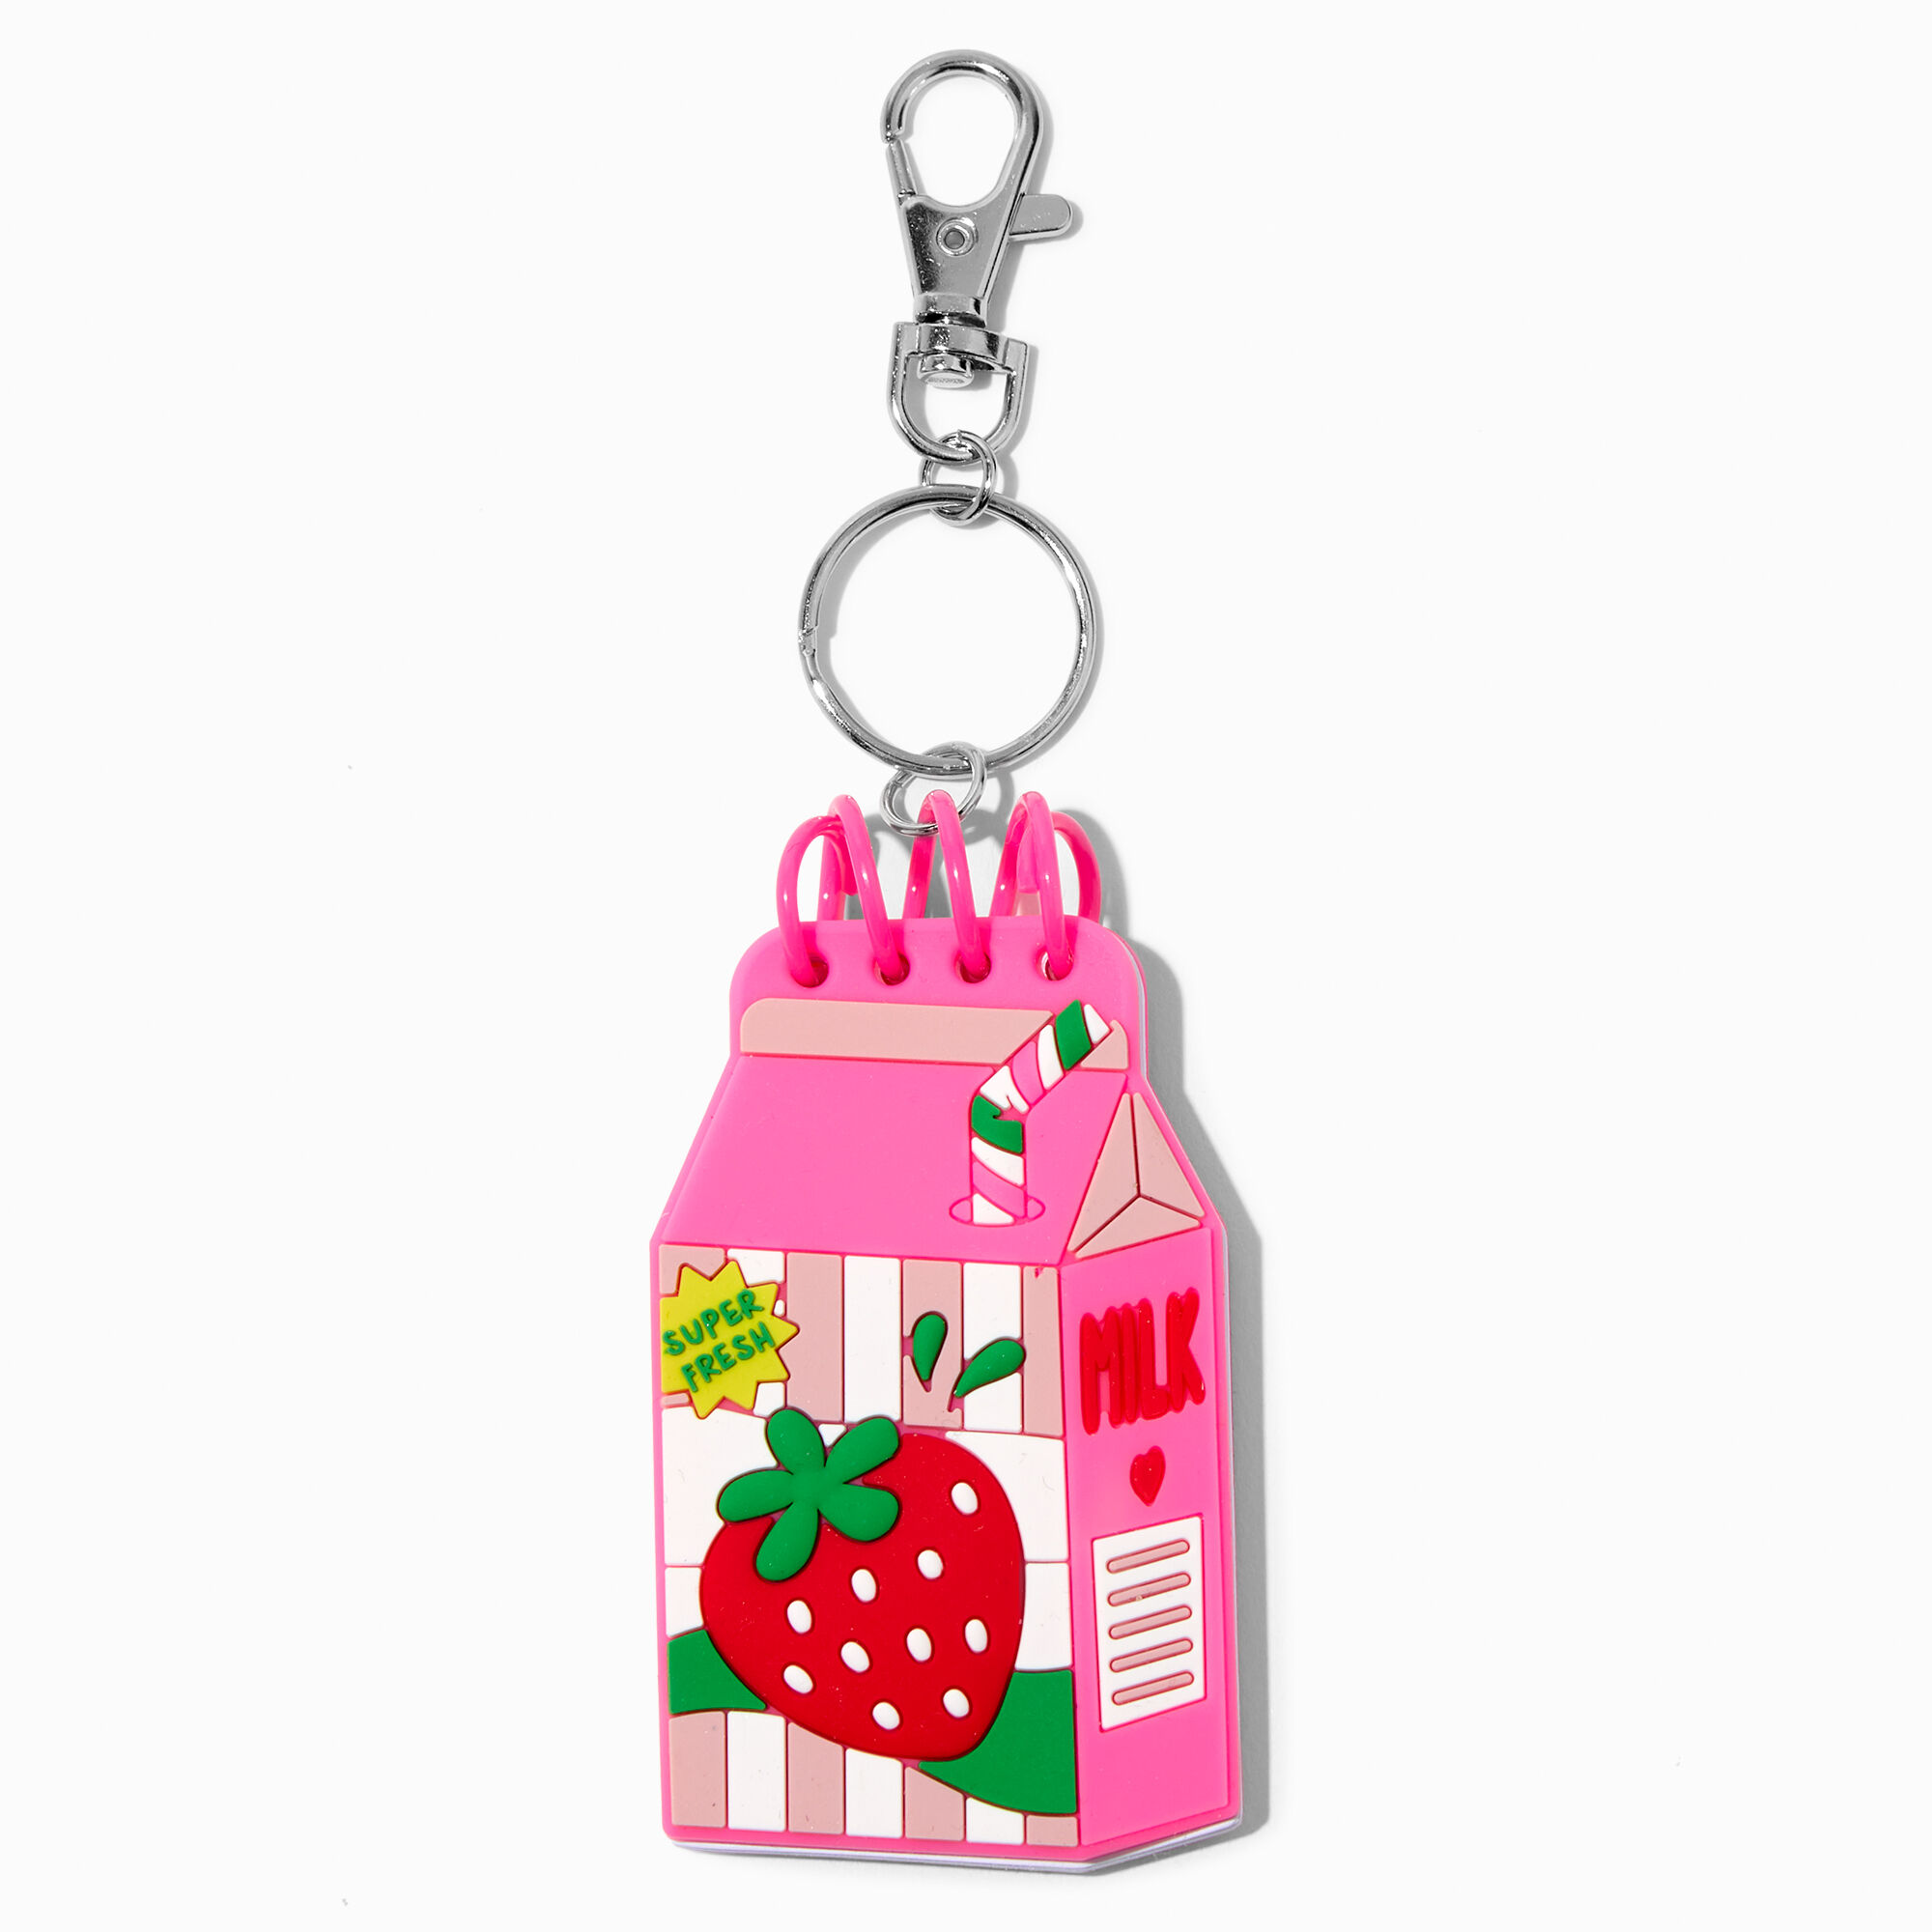 View Claires Strawberry Milk Carton Mini Diary Keychain information